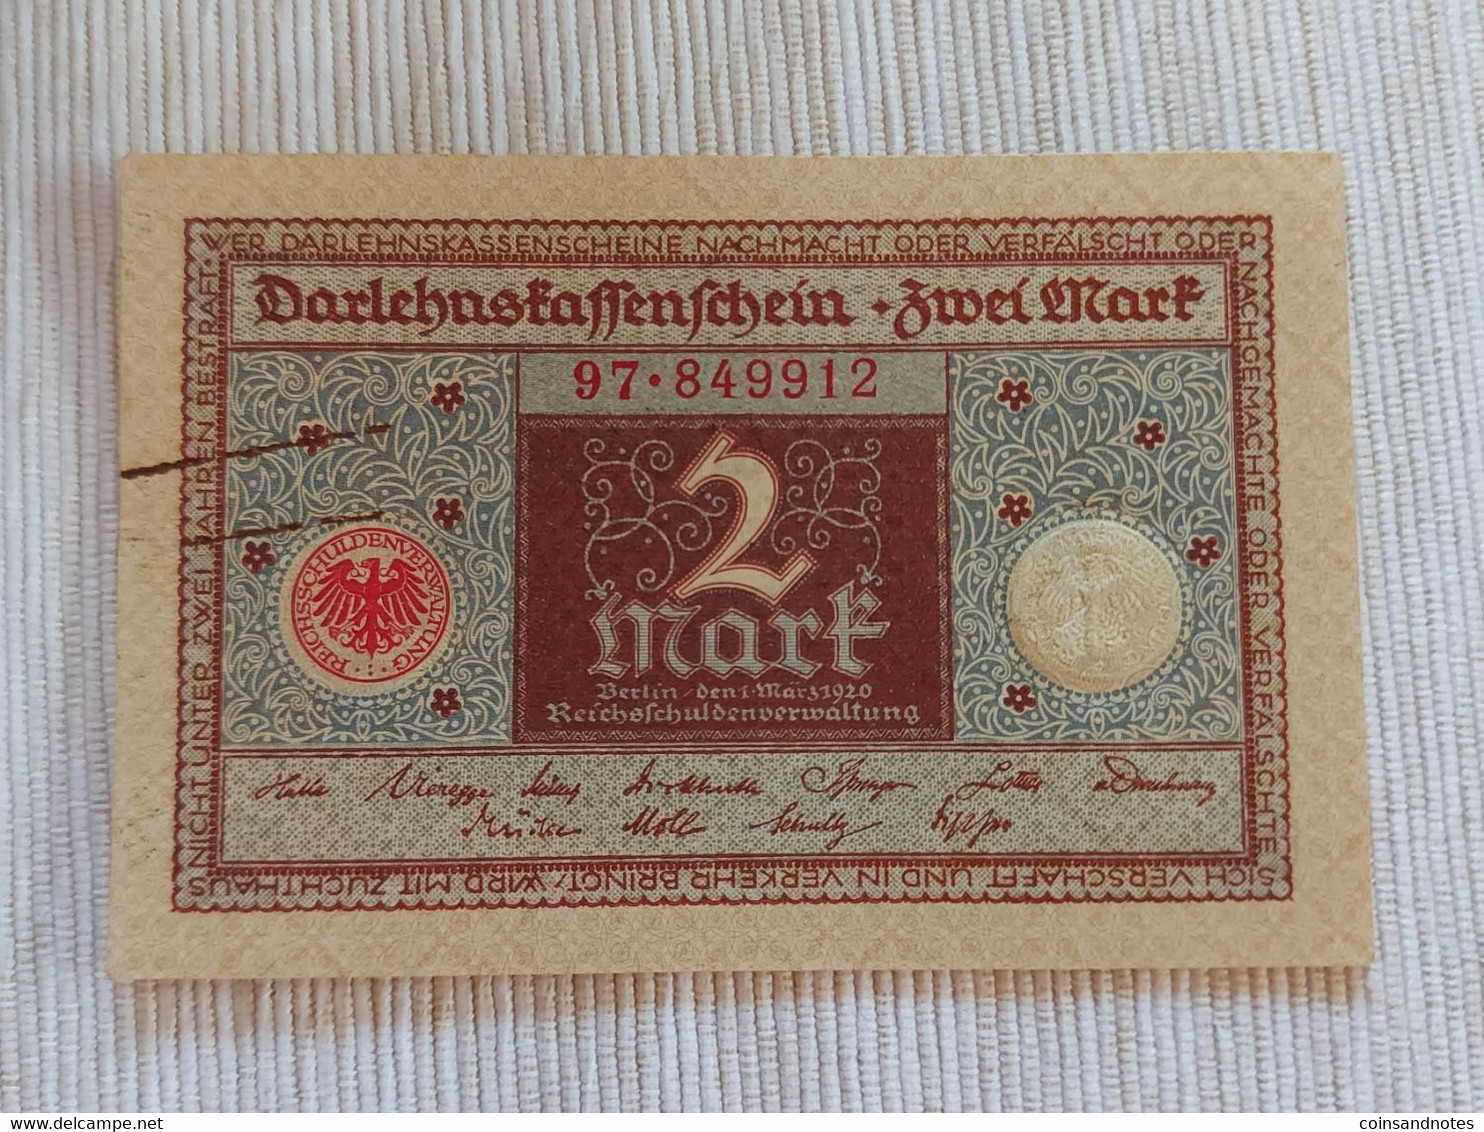 Germany 1920 - 2 Mark - Darlehenskassenschein - Rosenberg 65a - Nr 97.849912 - Very Good Condition - 2 Mark